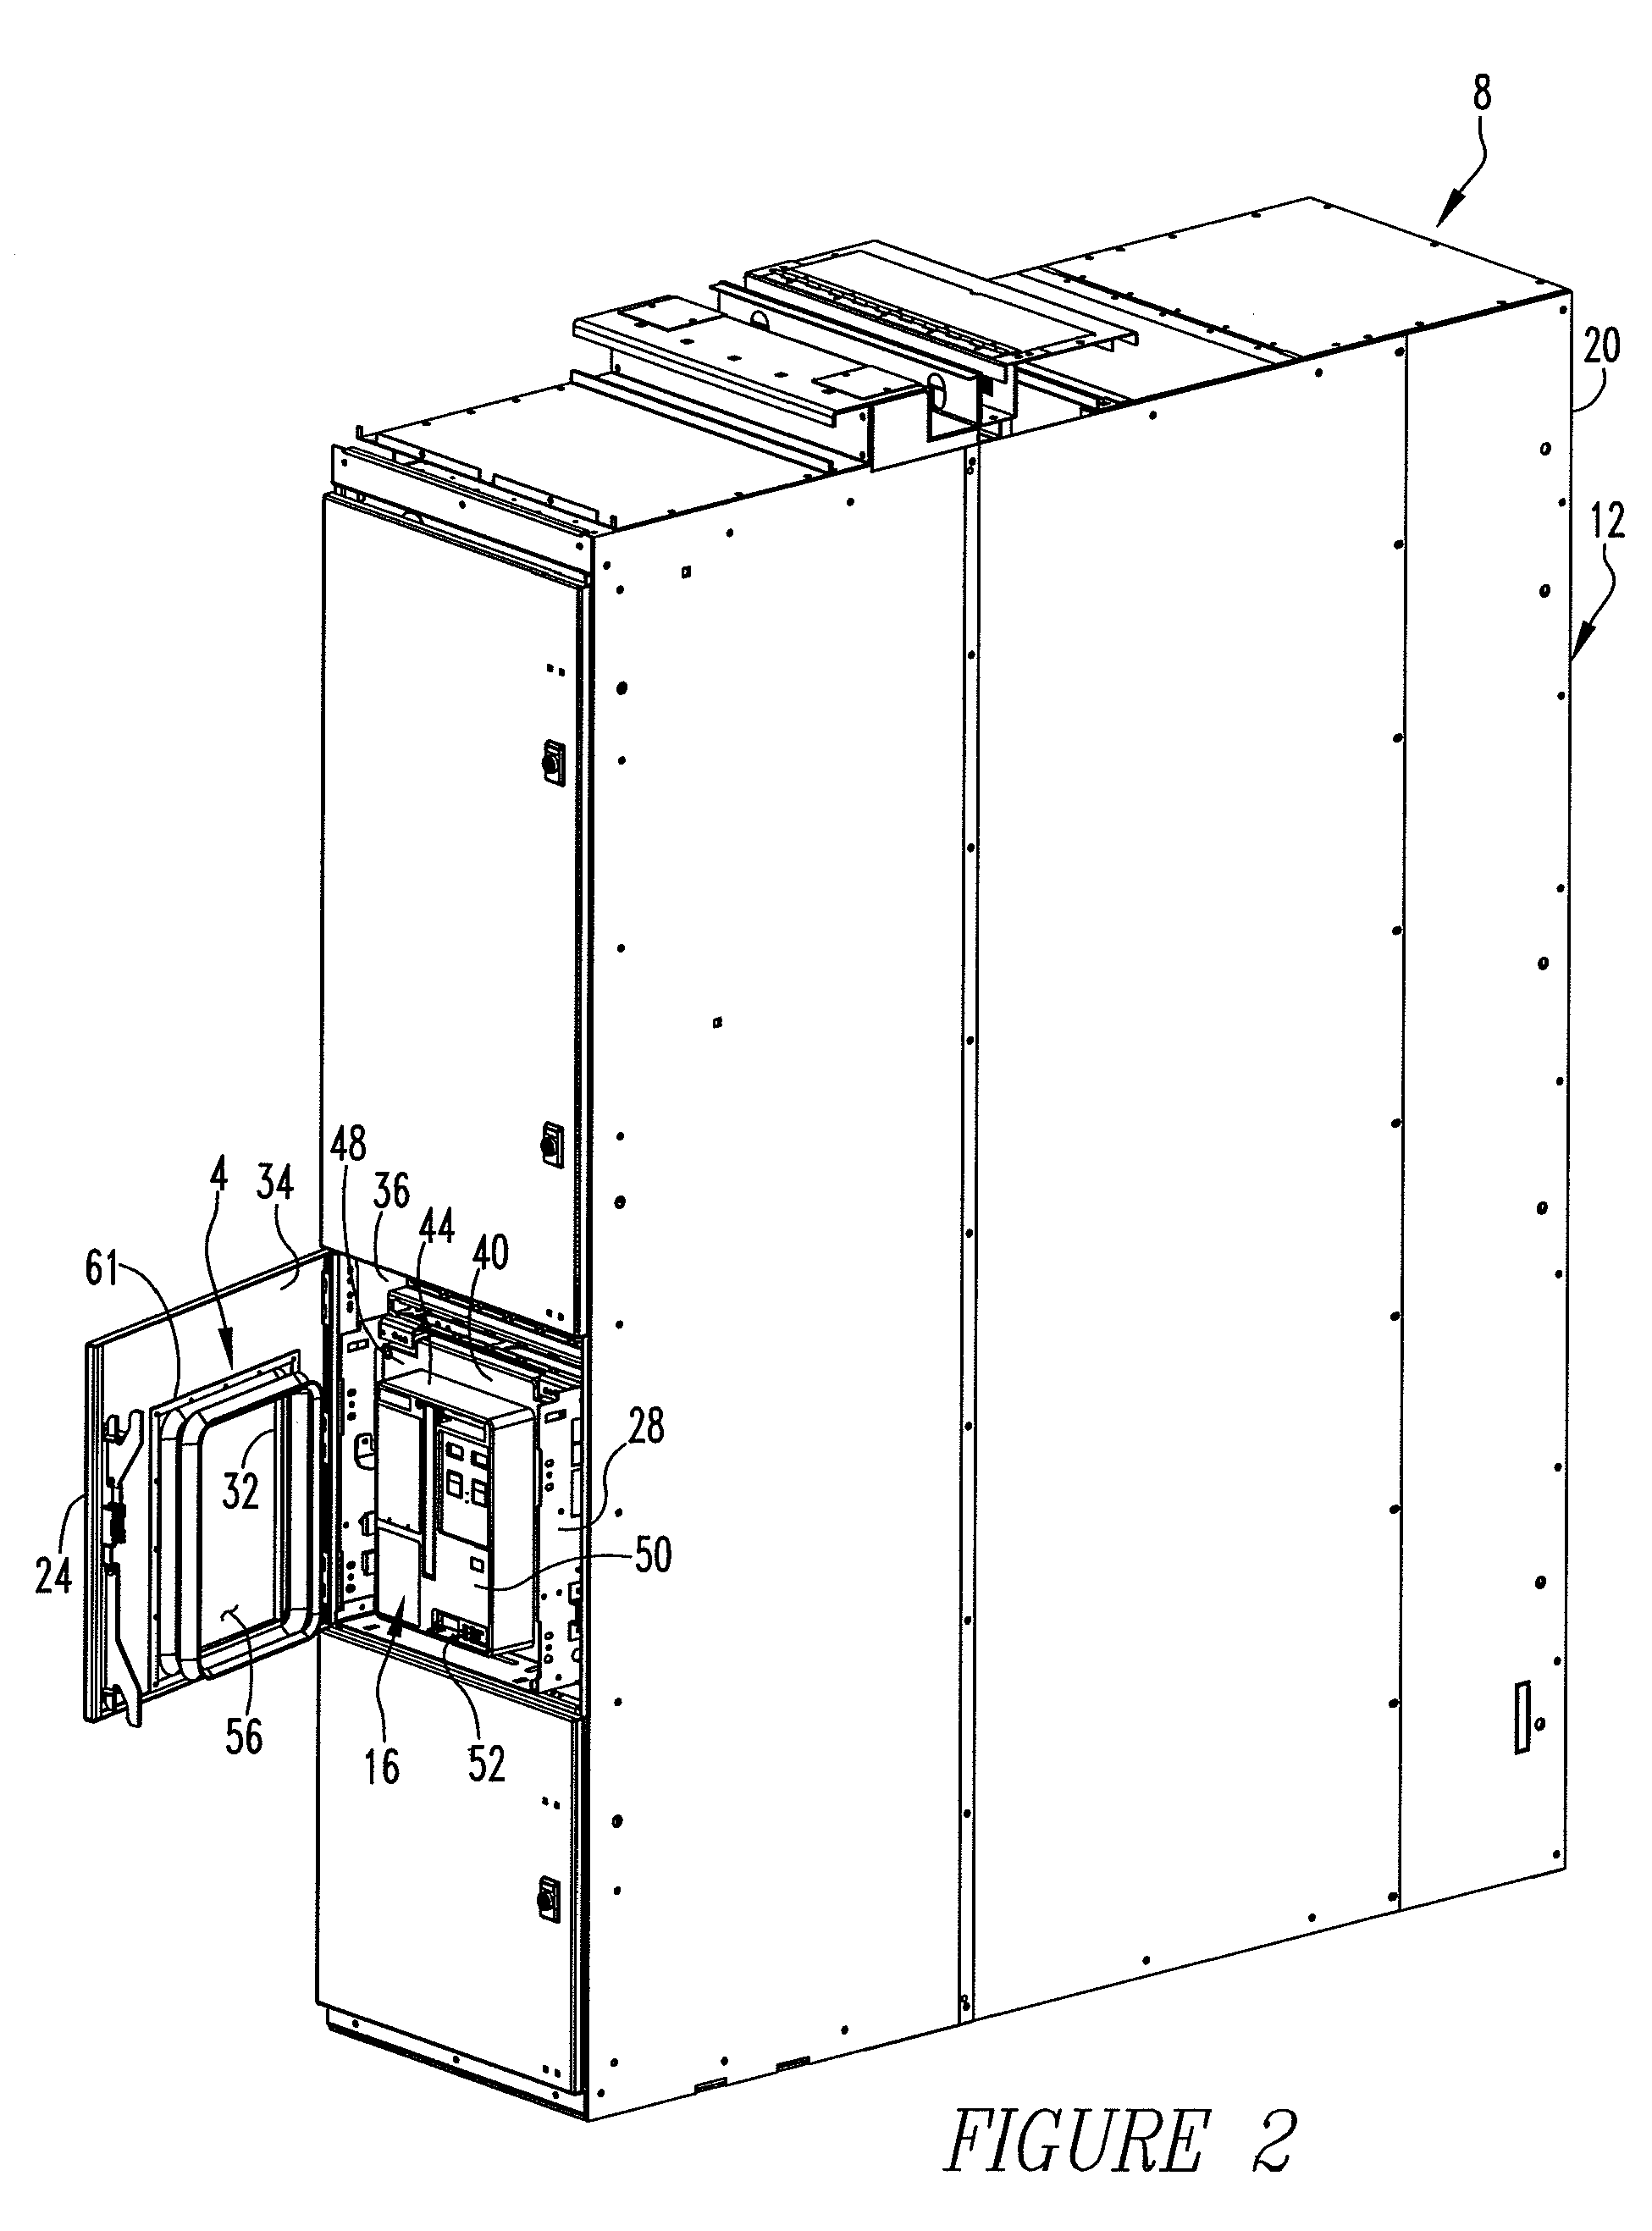 Seal apparatus for circuit breaker application